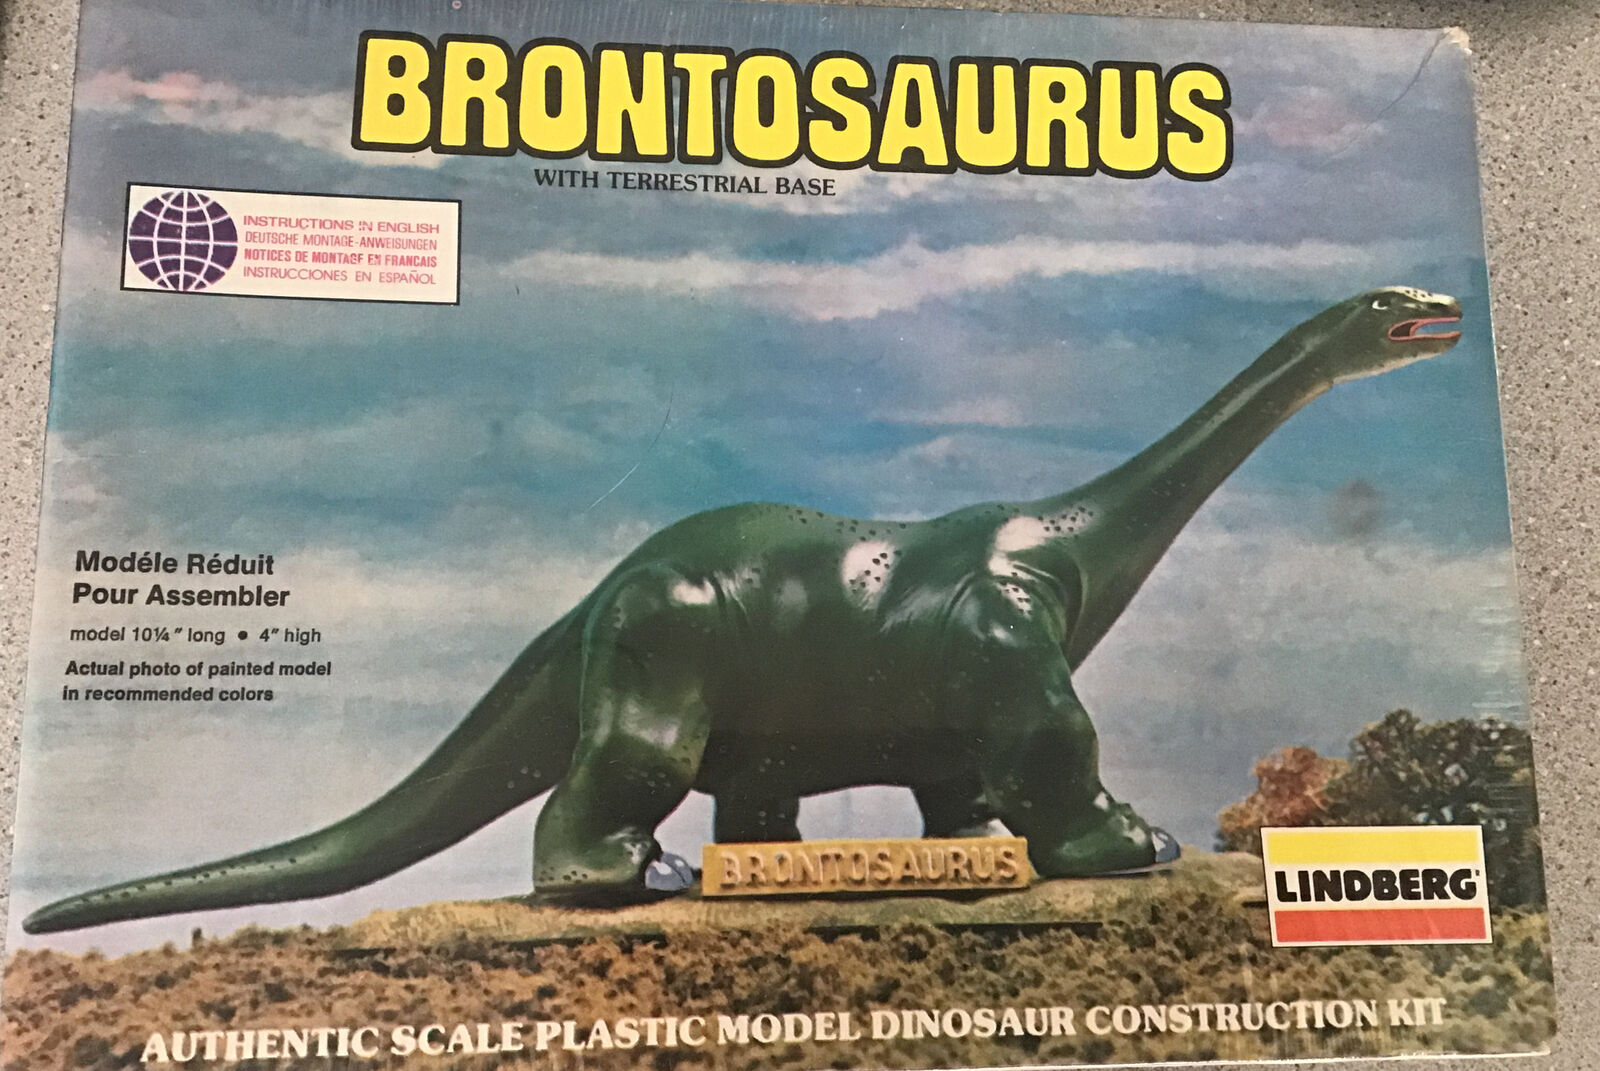 Vintage 1979 Linberg Brontosaurus w/ terrestrial base model NEW / SEALED